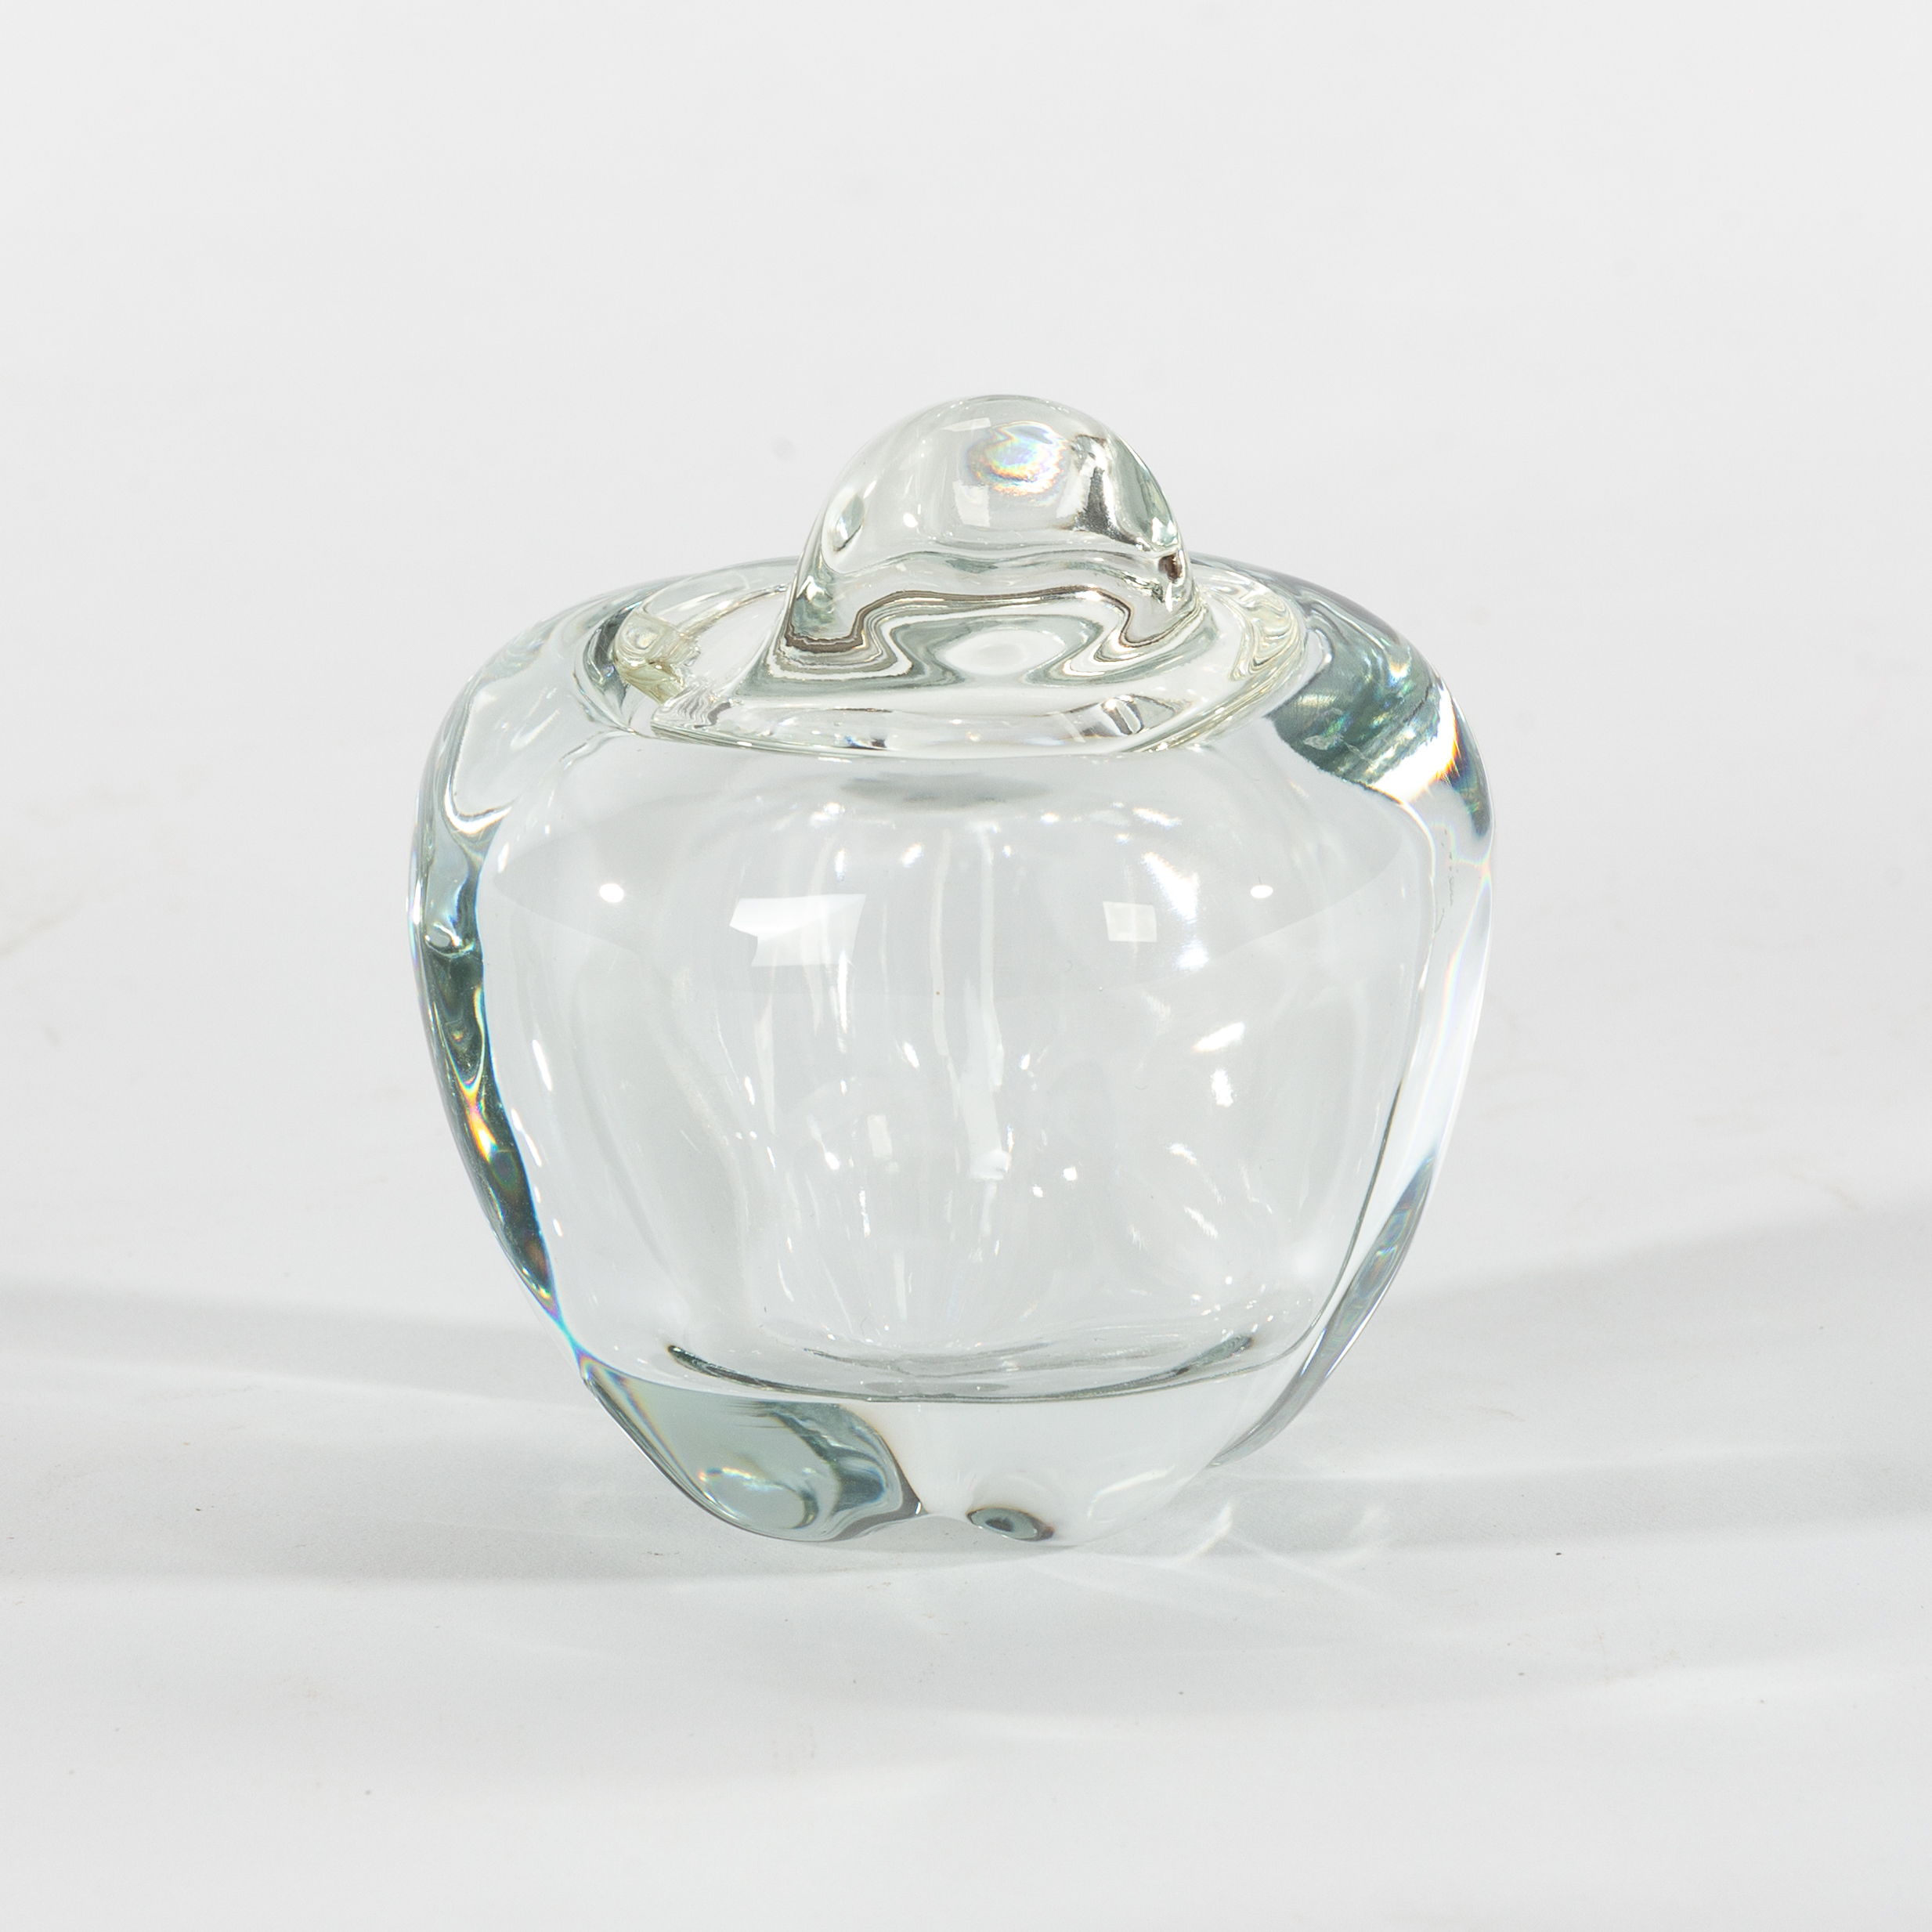 Elsa Peretti (Italian, born 1940) for Tiffany & Co, a glass condiment jar of apple form,